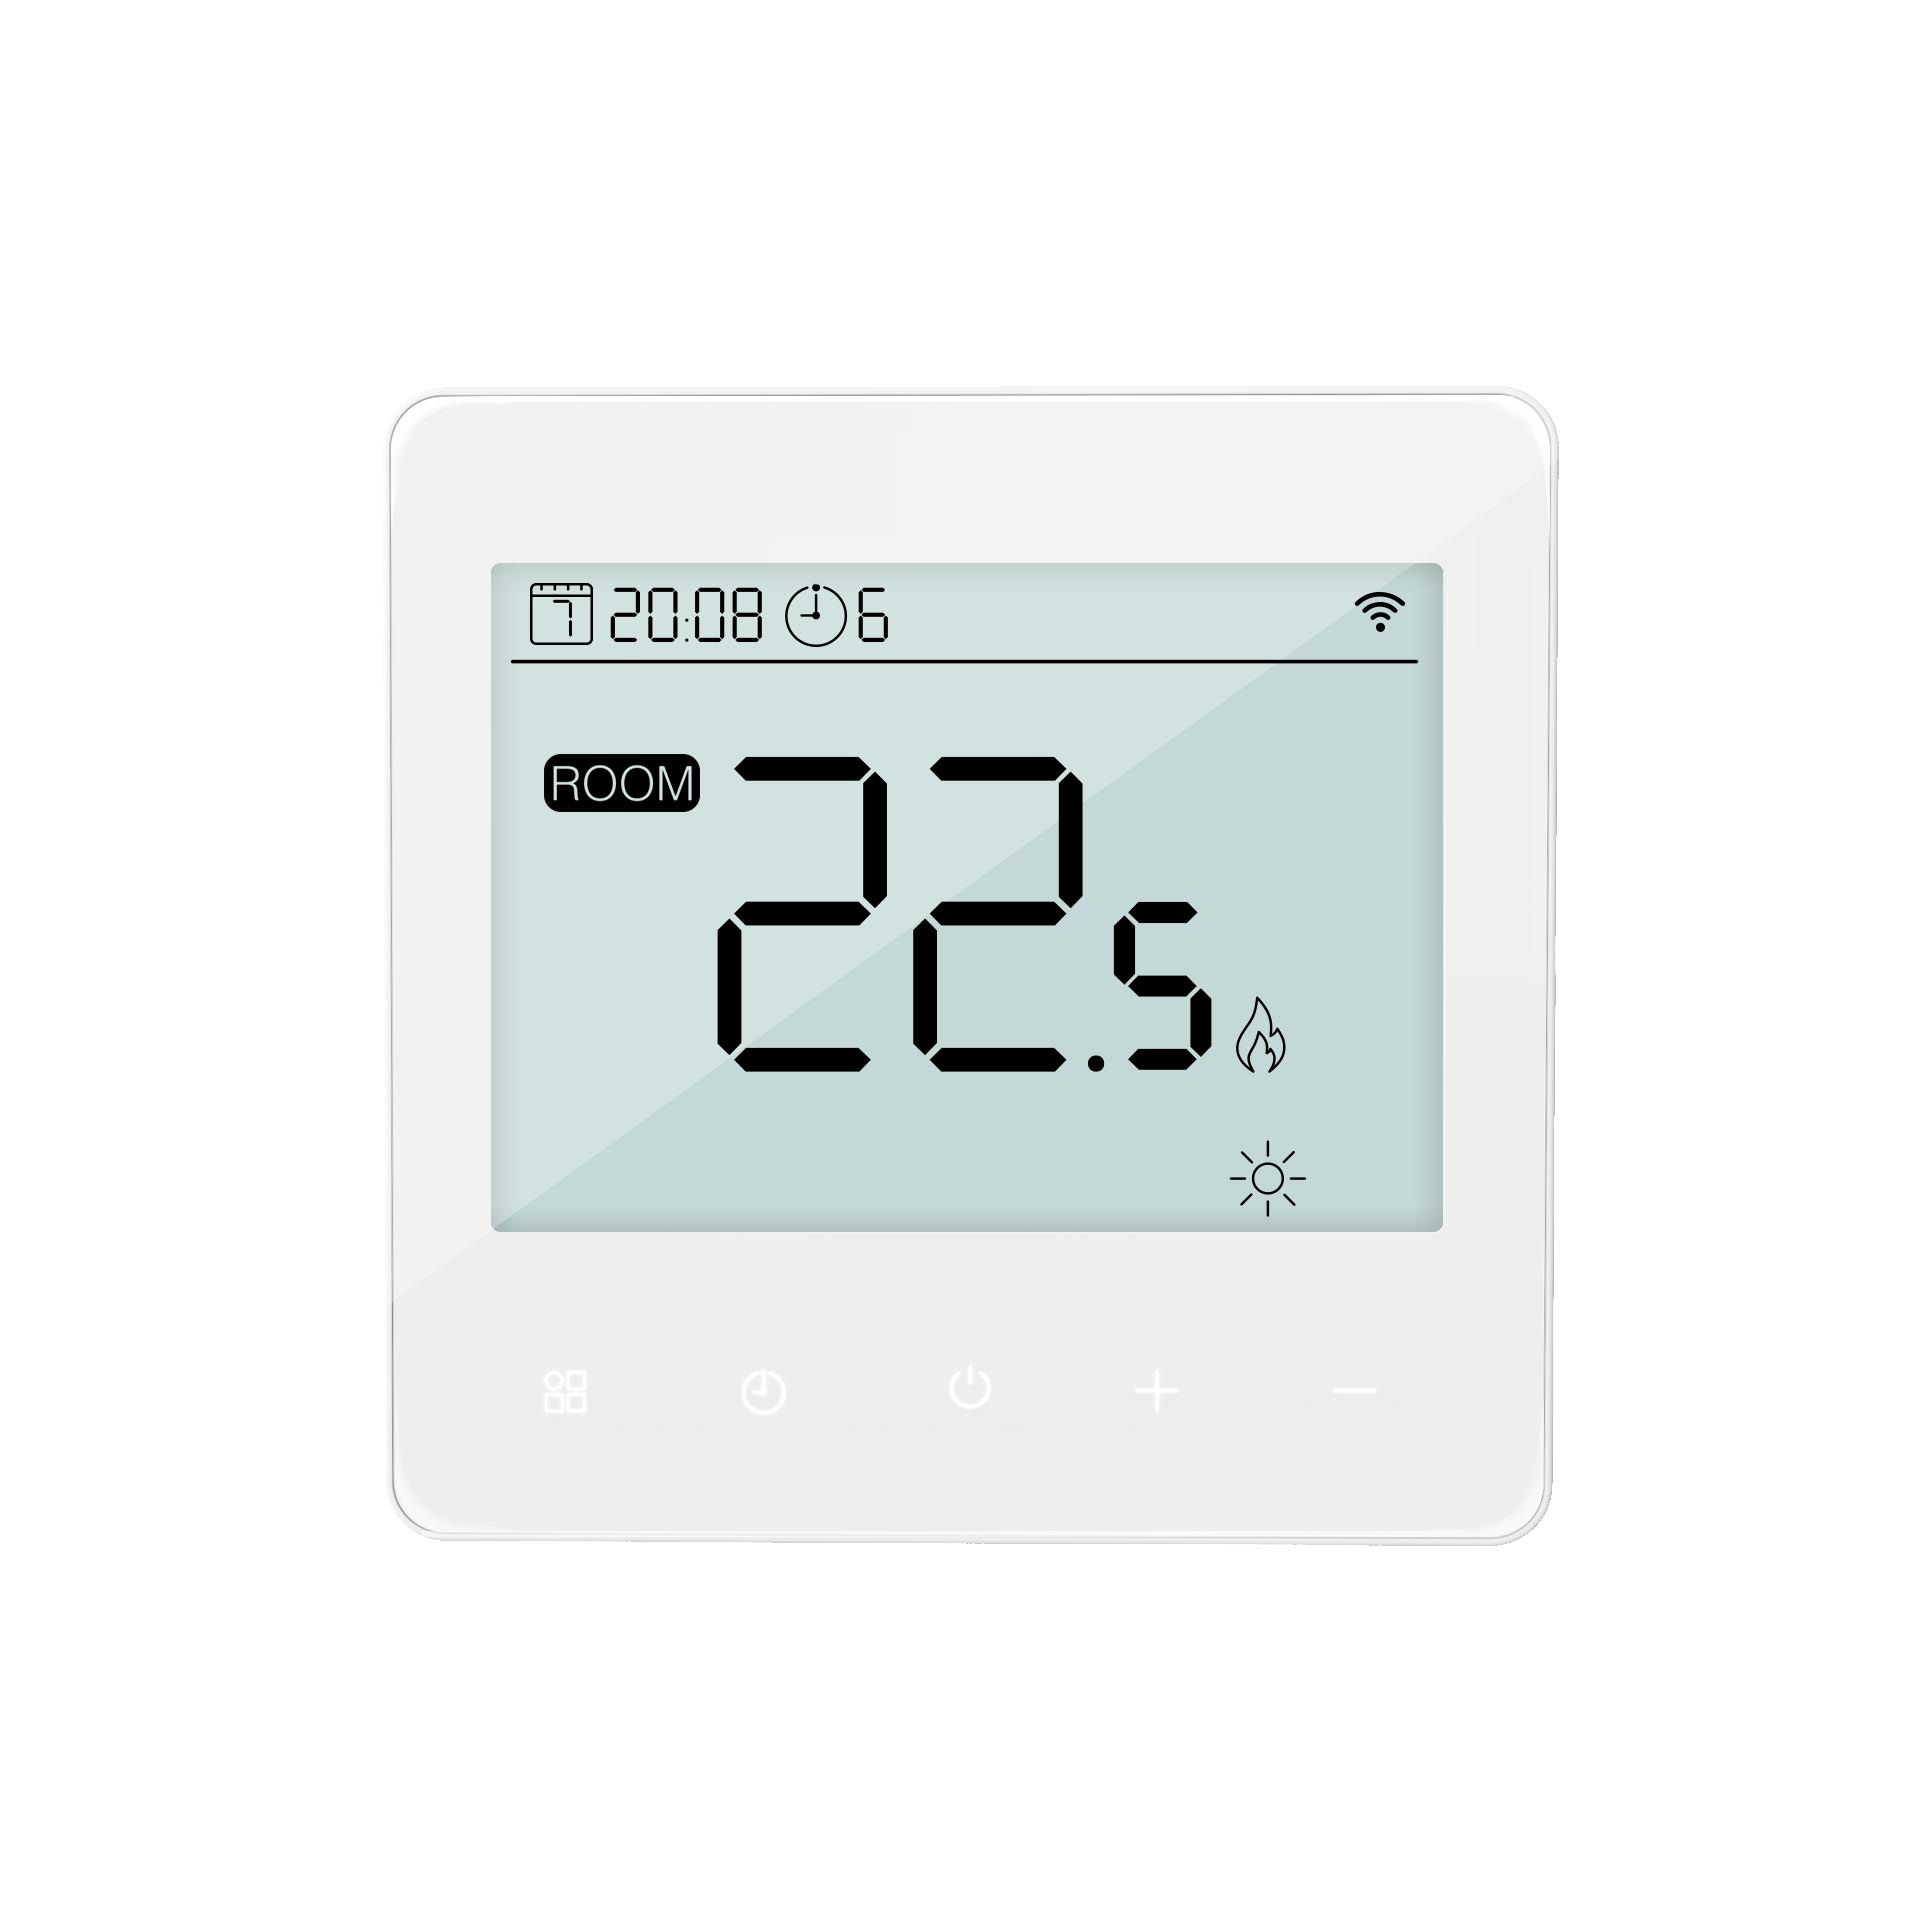 Heat pump smart thermostat